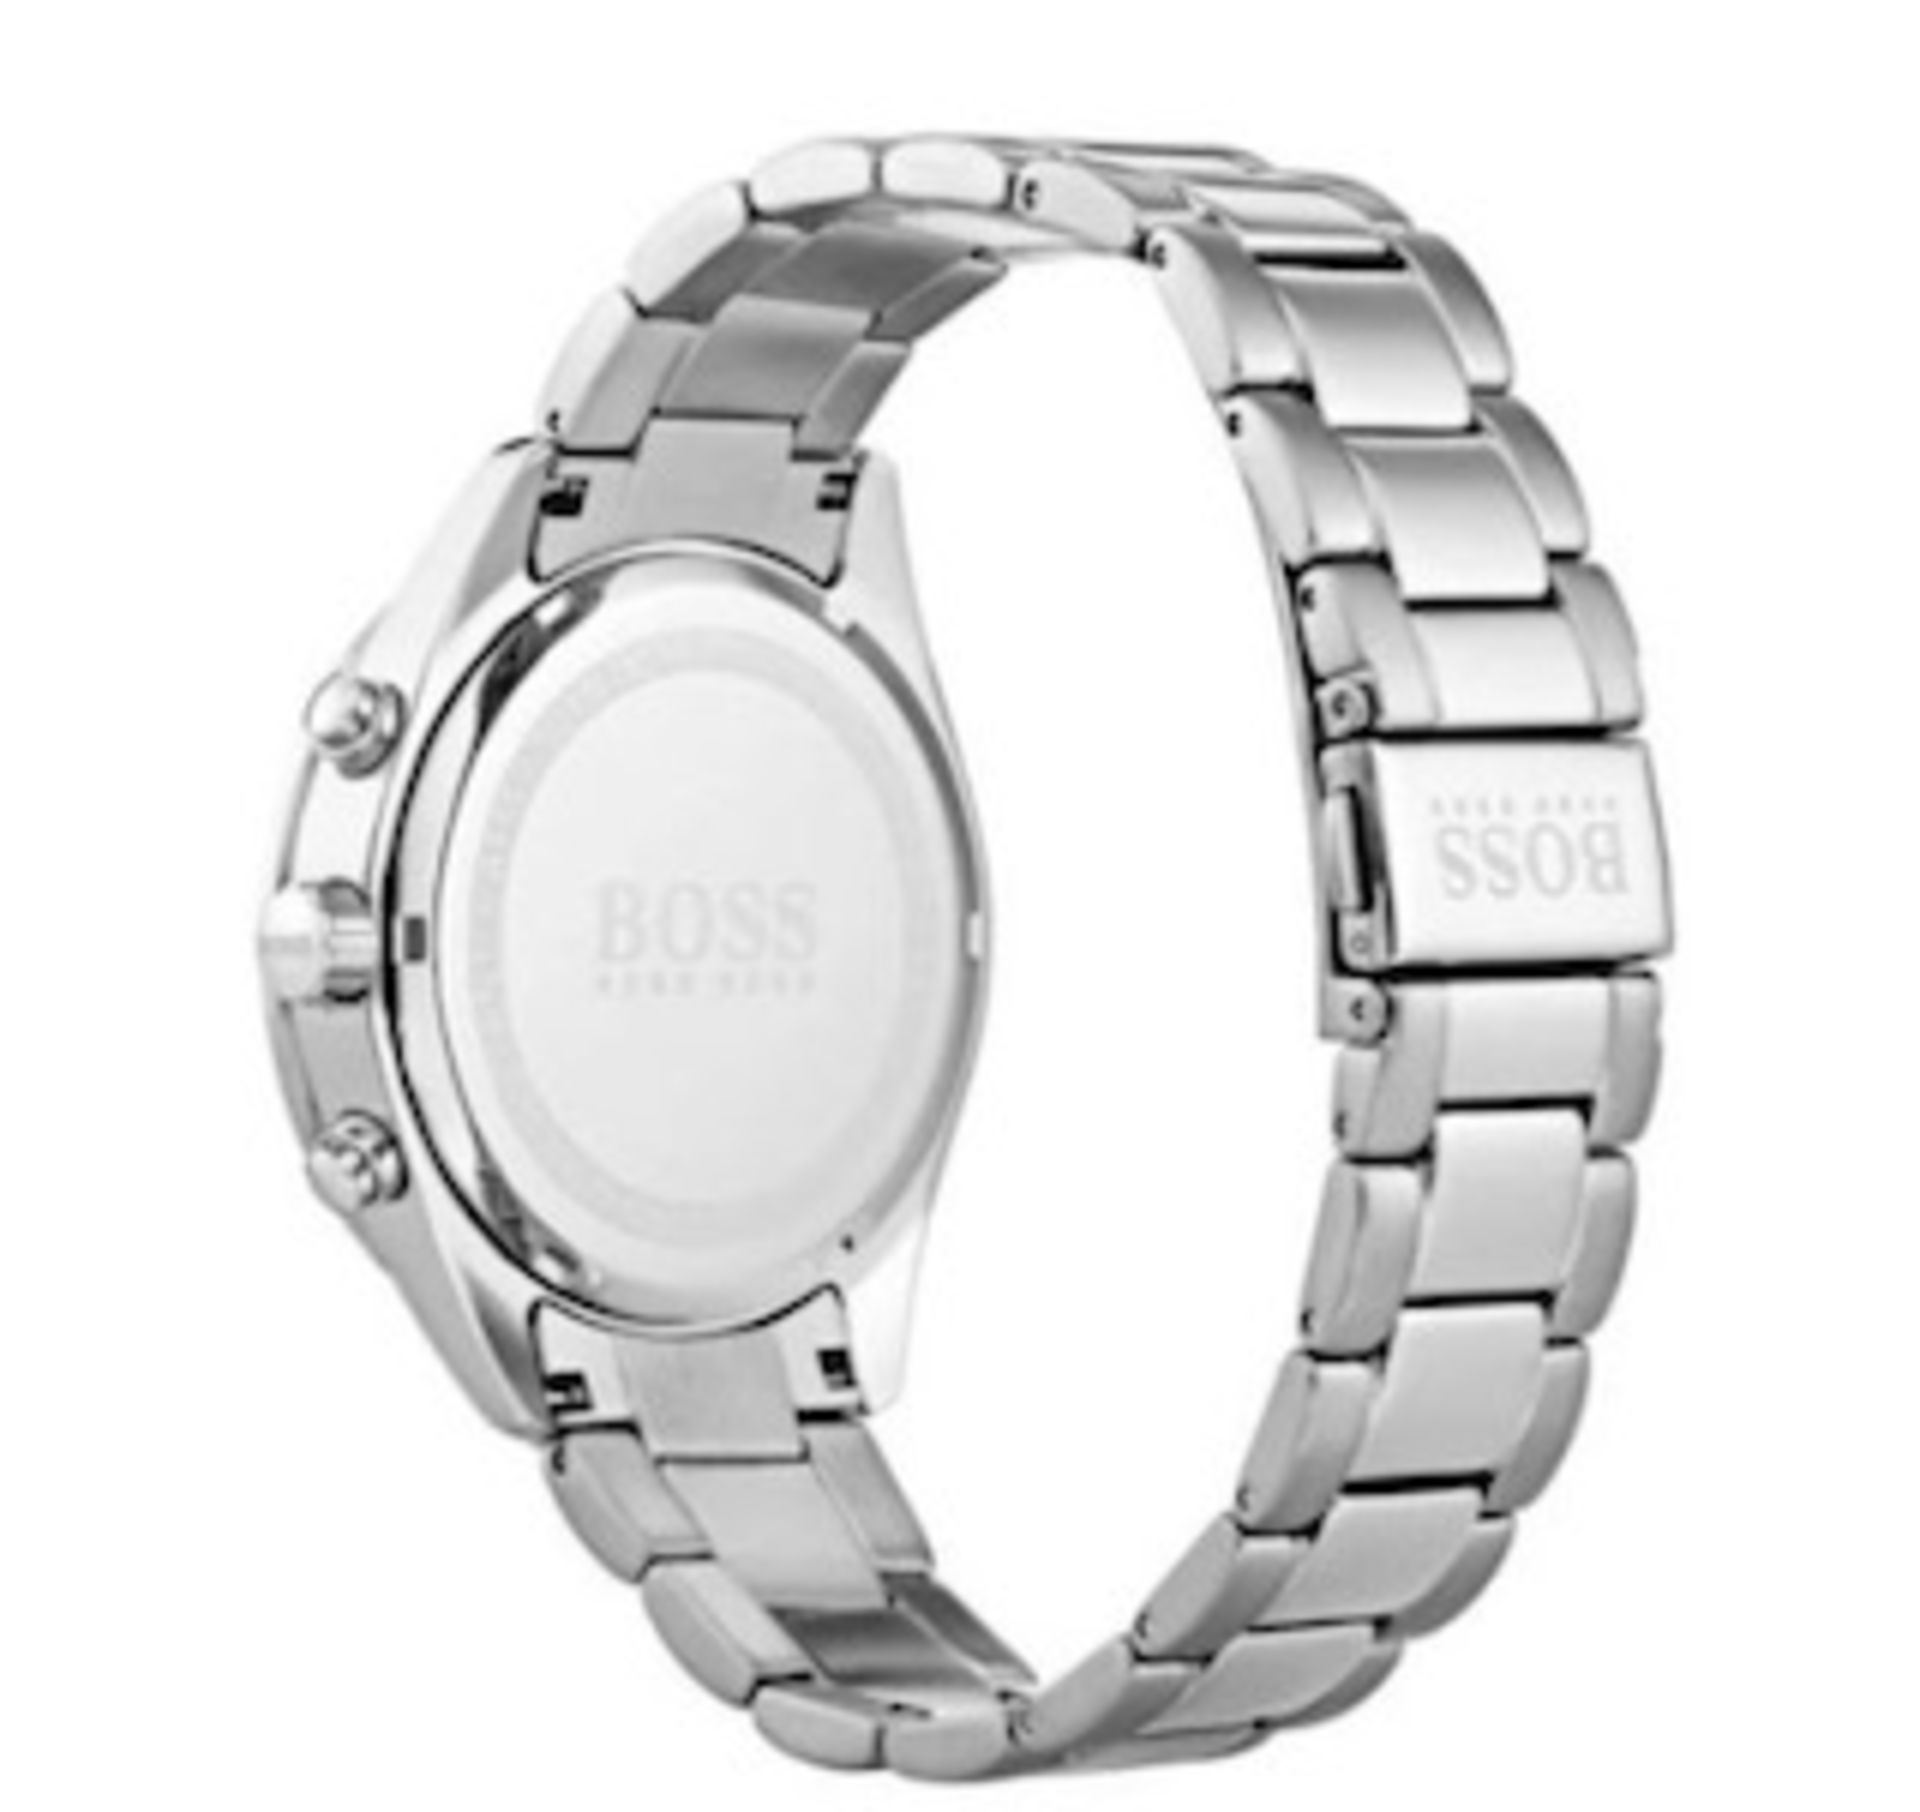 Hugo Boss 1513582 Men's Hero Lux Sport Silver Bracelet Chronograph Watch - Image 5 of 5